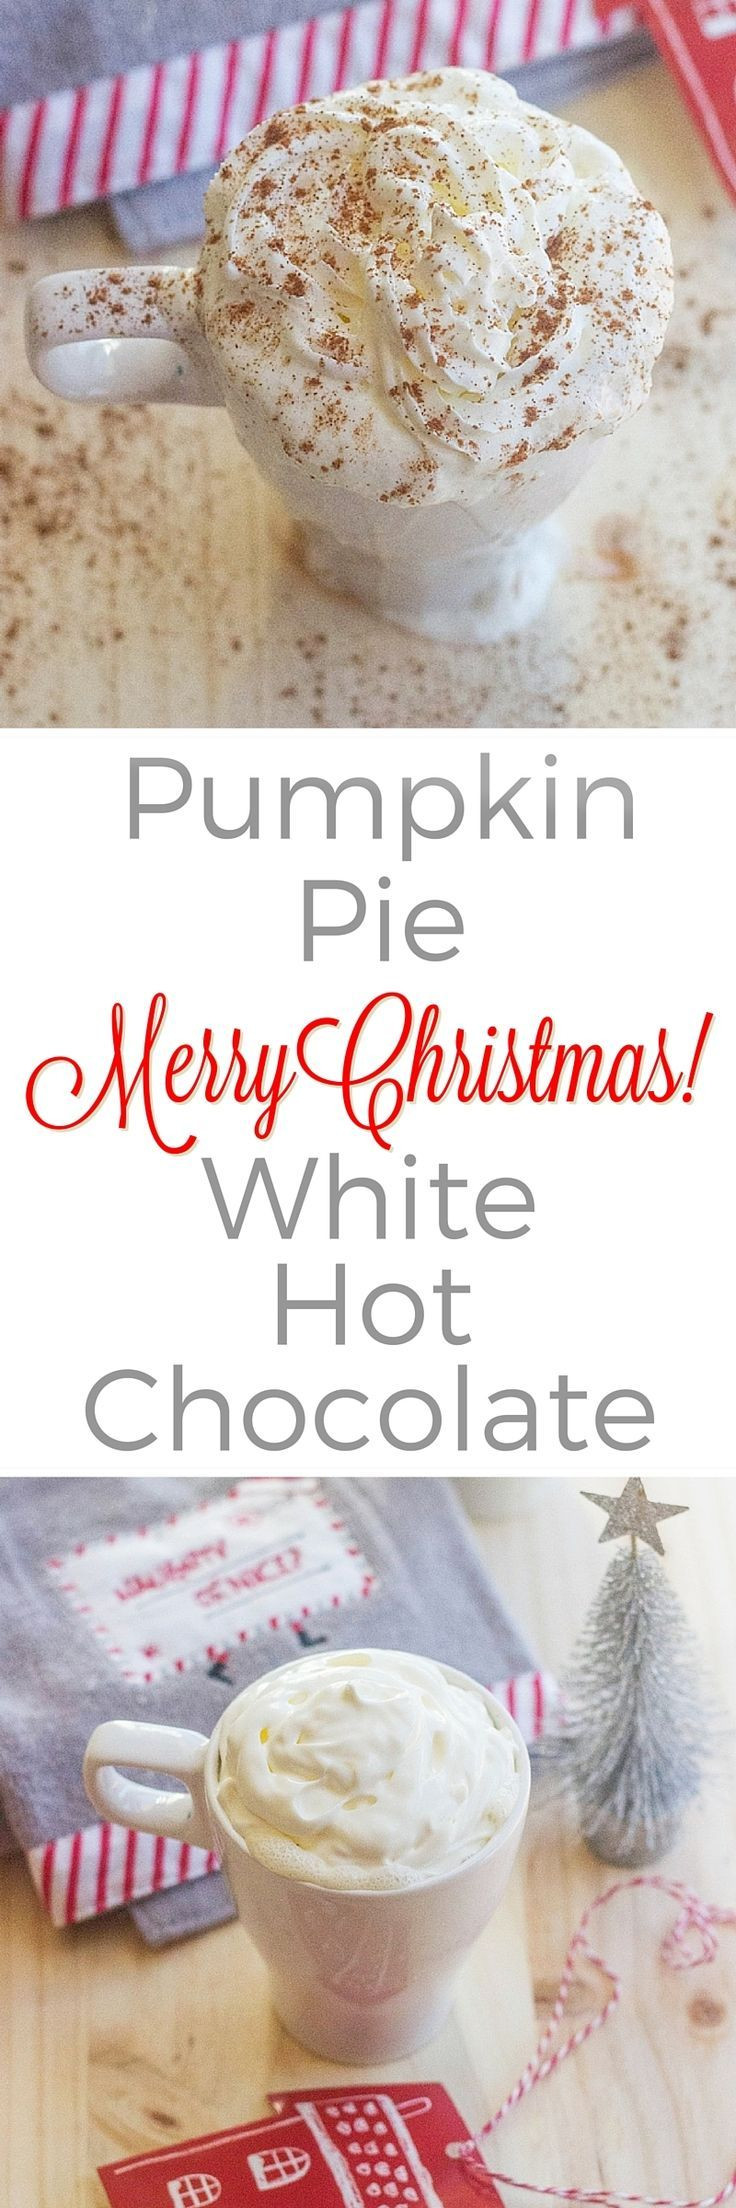 White Christmas Pie Recipes
 Pumpkin Pie White Hot Chocolate Recipe